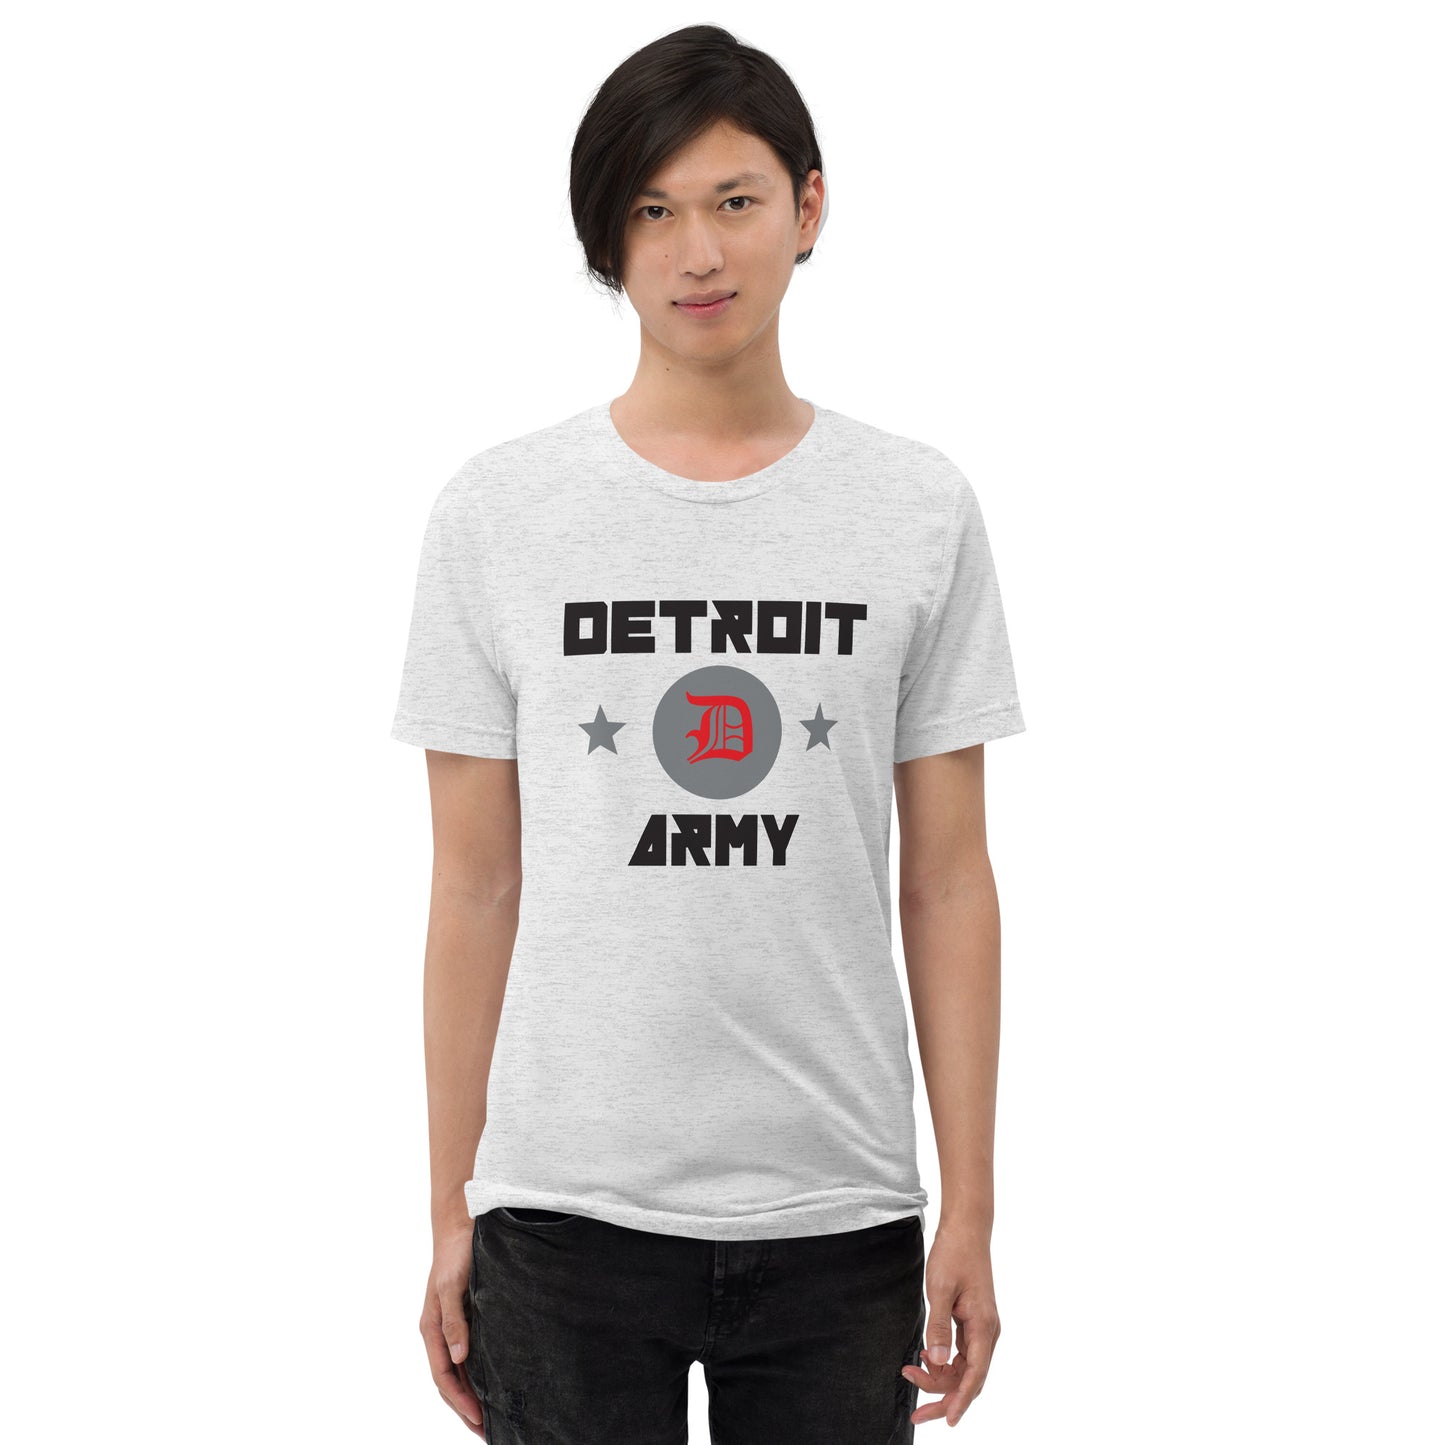 Detroit Army 'Original' - White unisex short sleeve Detroit t-shirt